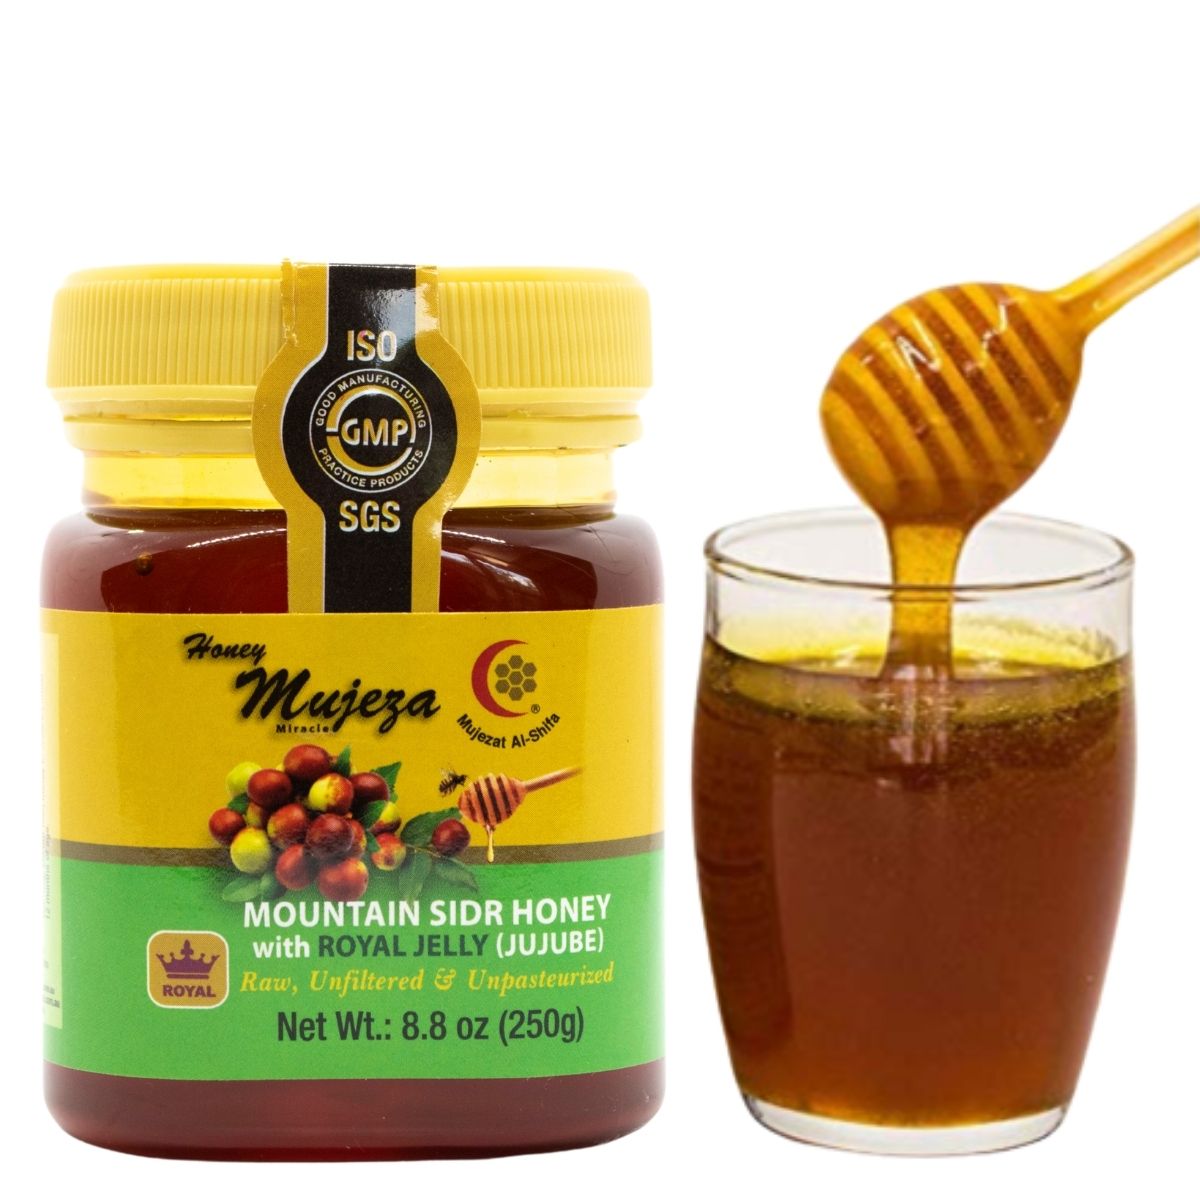 Mountain Sidr Honey (Jujube) with Royal Jelly (250g) - عسل السدر الجبلي مع غذاء الملكات - Mujeza Honey - 2